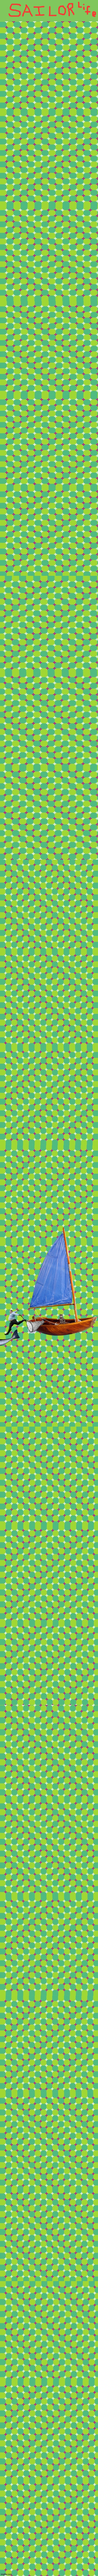 Let's Go Sailing, Ho Ho Hos!  :)  :)  :) | image tagged in let's go sailing ho ho hos | made w/ Imgflip meme maker